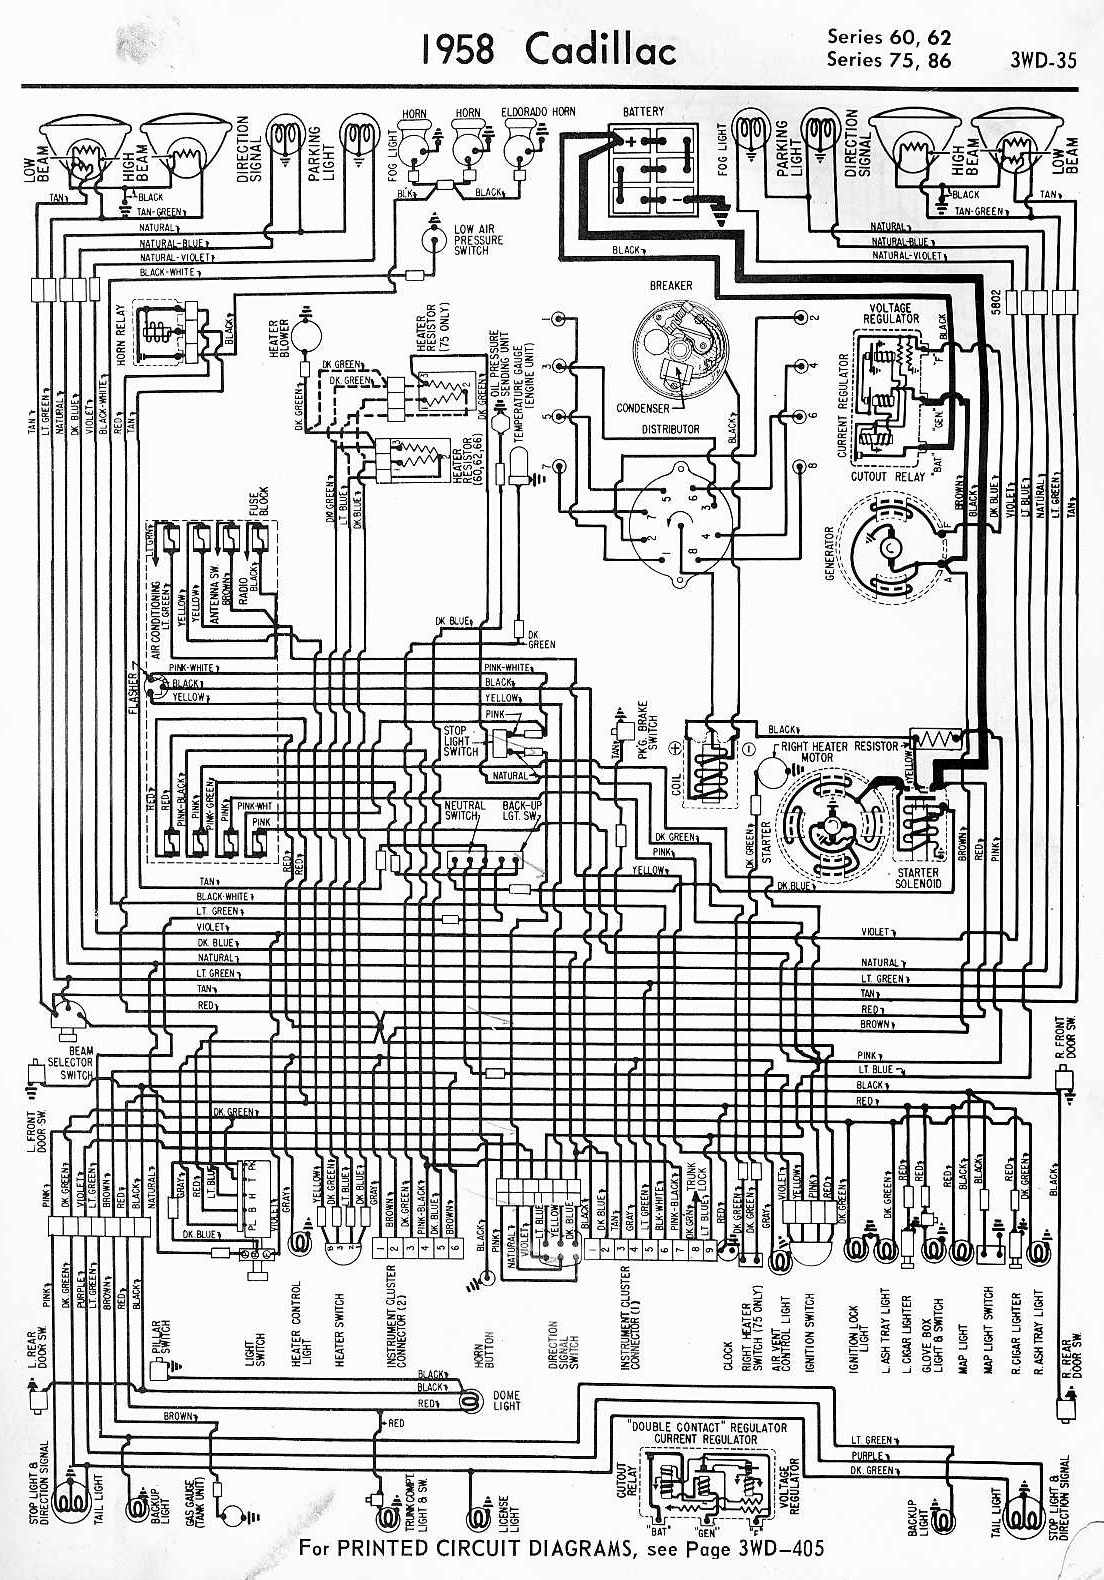 1963 Cadillac Fleetwood Wiring Diagrams Database - Wiring Diagram Sample